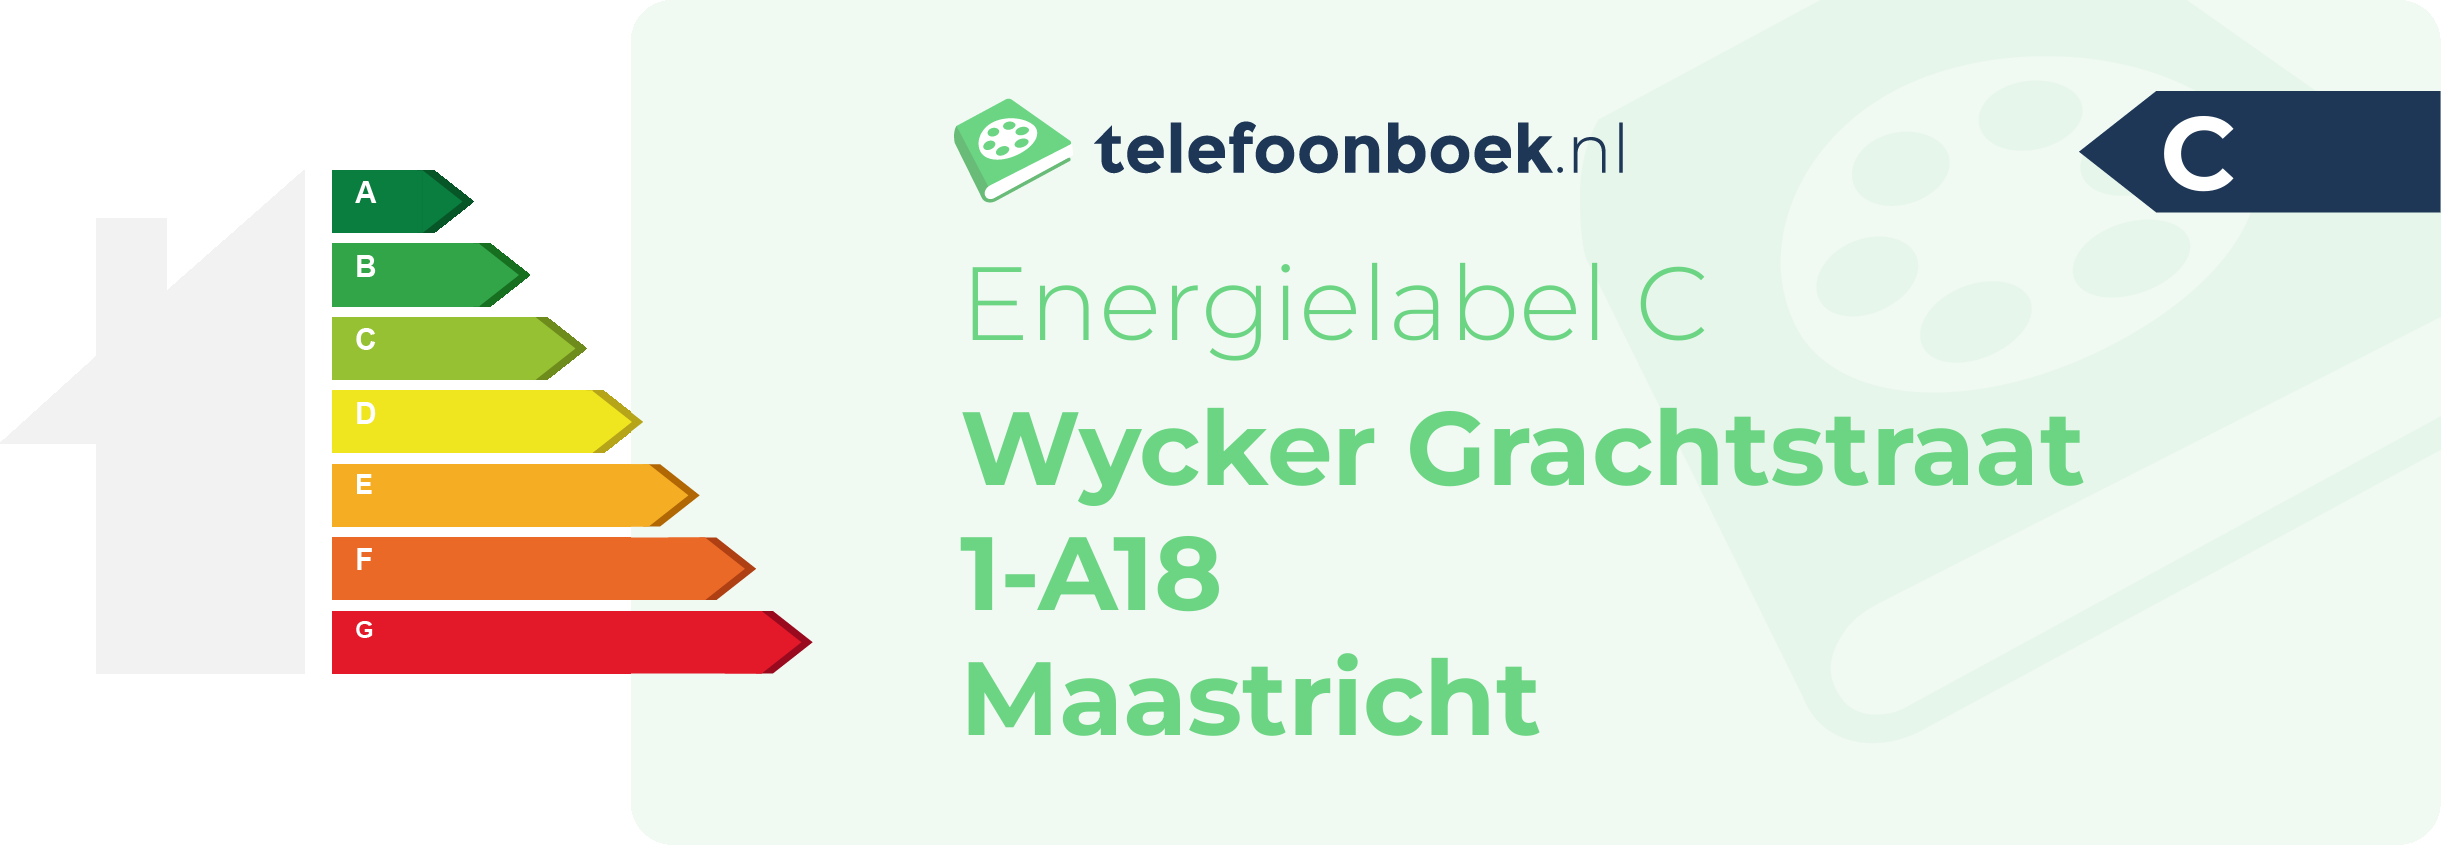 Energielabel Wycker Grachtstraat 1-A18 Maastricht